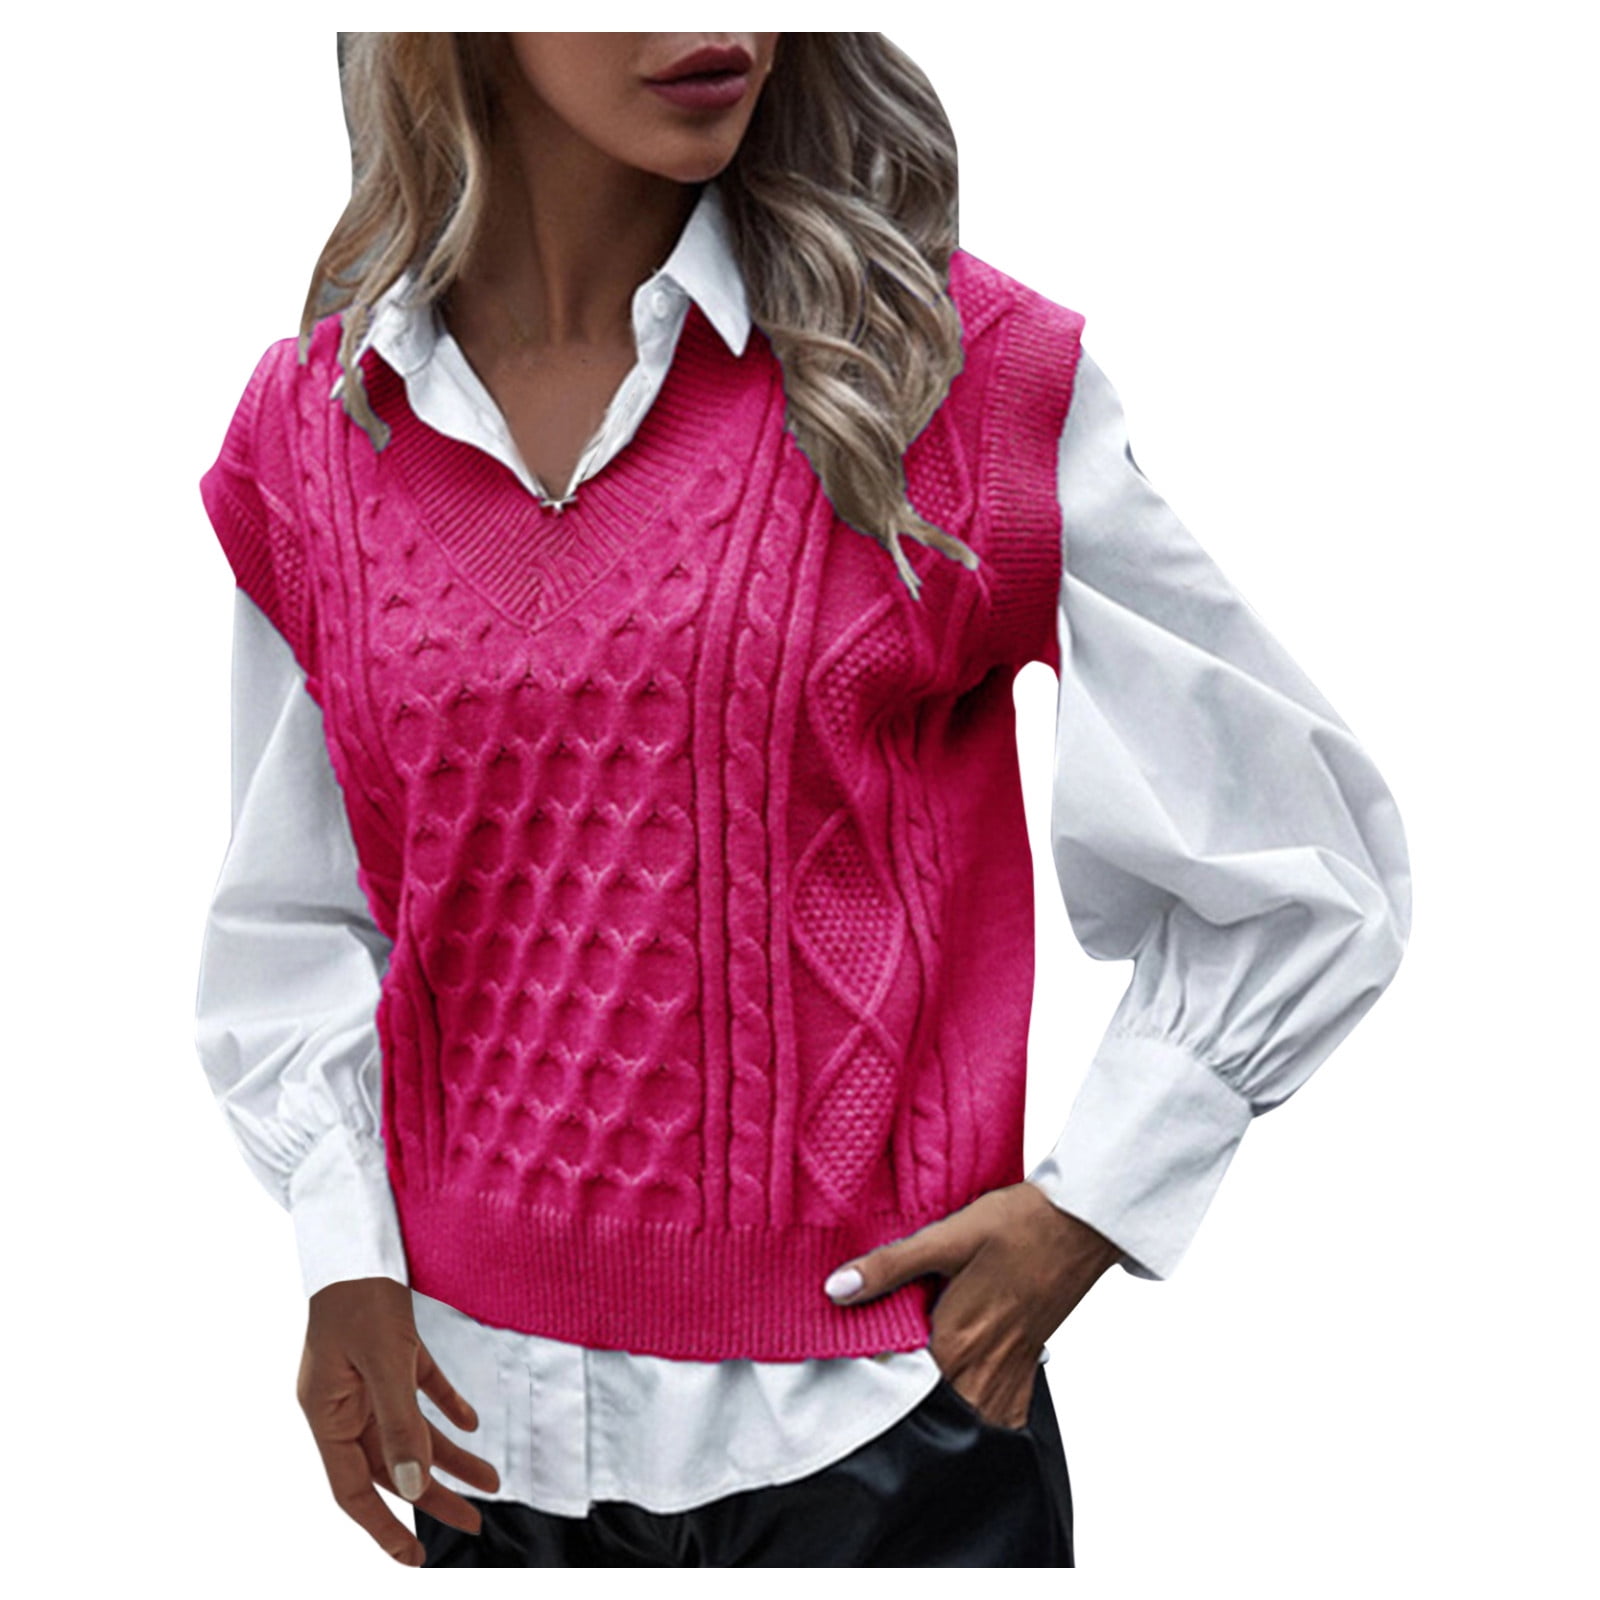 JDEFEG Cable Knit Coat Women's Sweater Vest Preppy Style Knitwear